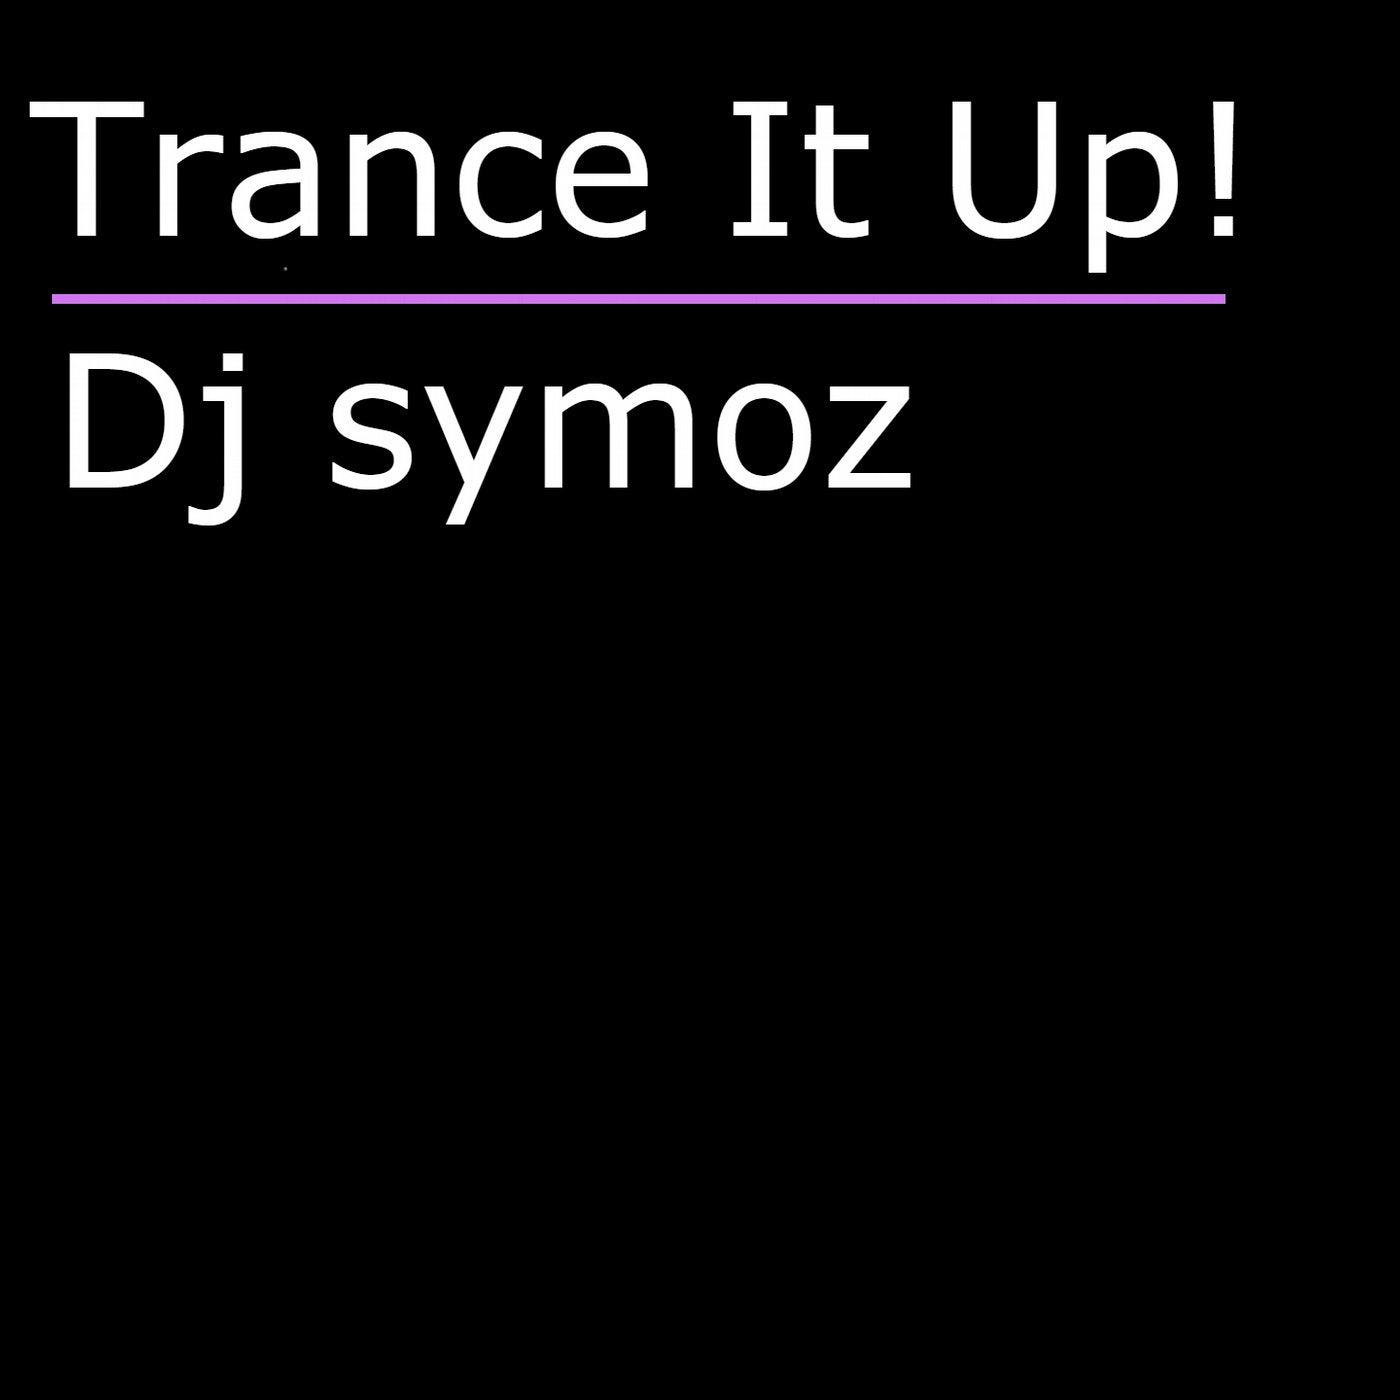 Trance It up!